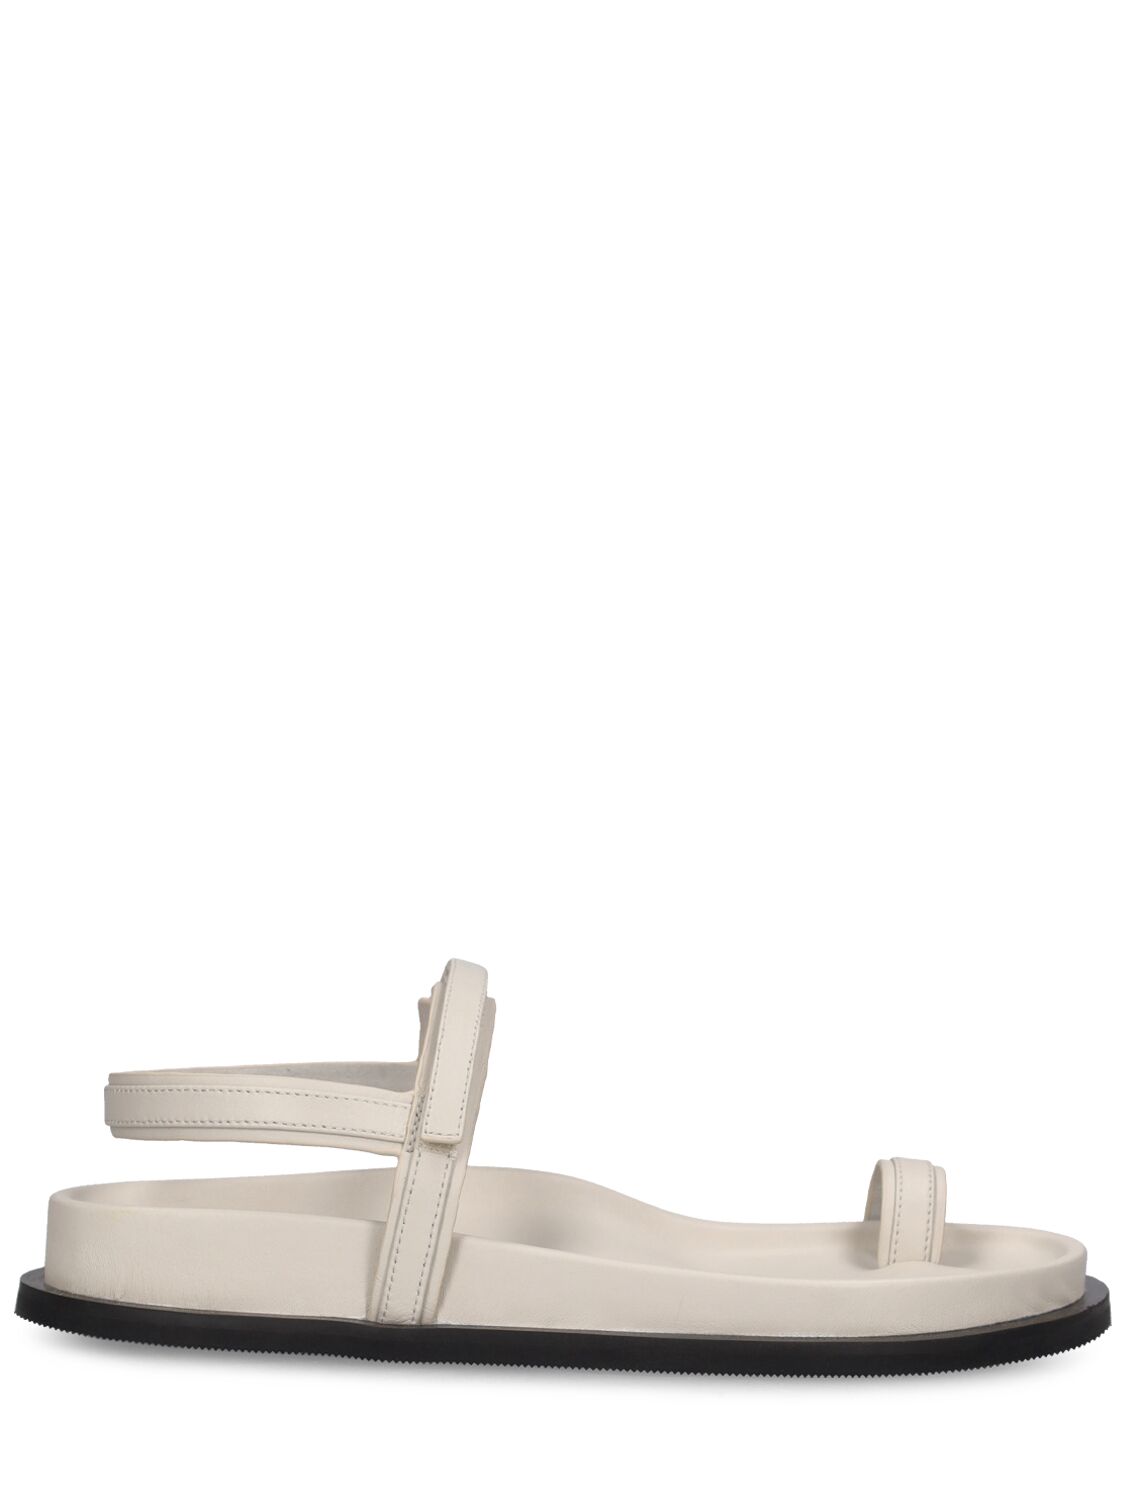 St.agni 30mm Keko Leather Flat Sandals In Off White